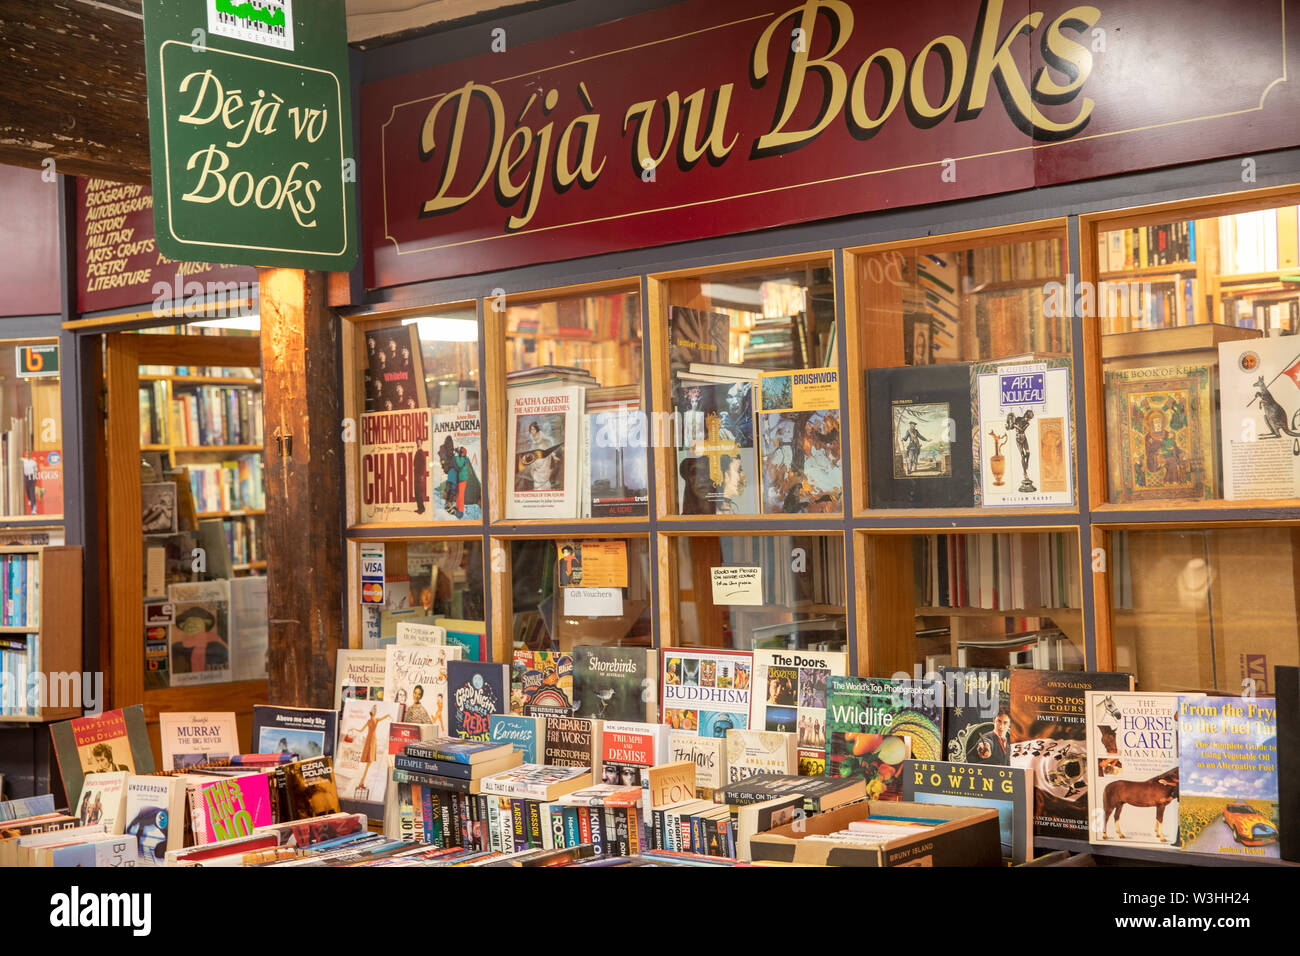 Deja Vu books bookstore in Hobart city centre,Tasmania,Australia Photo Alamy